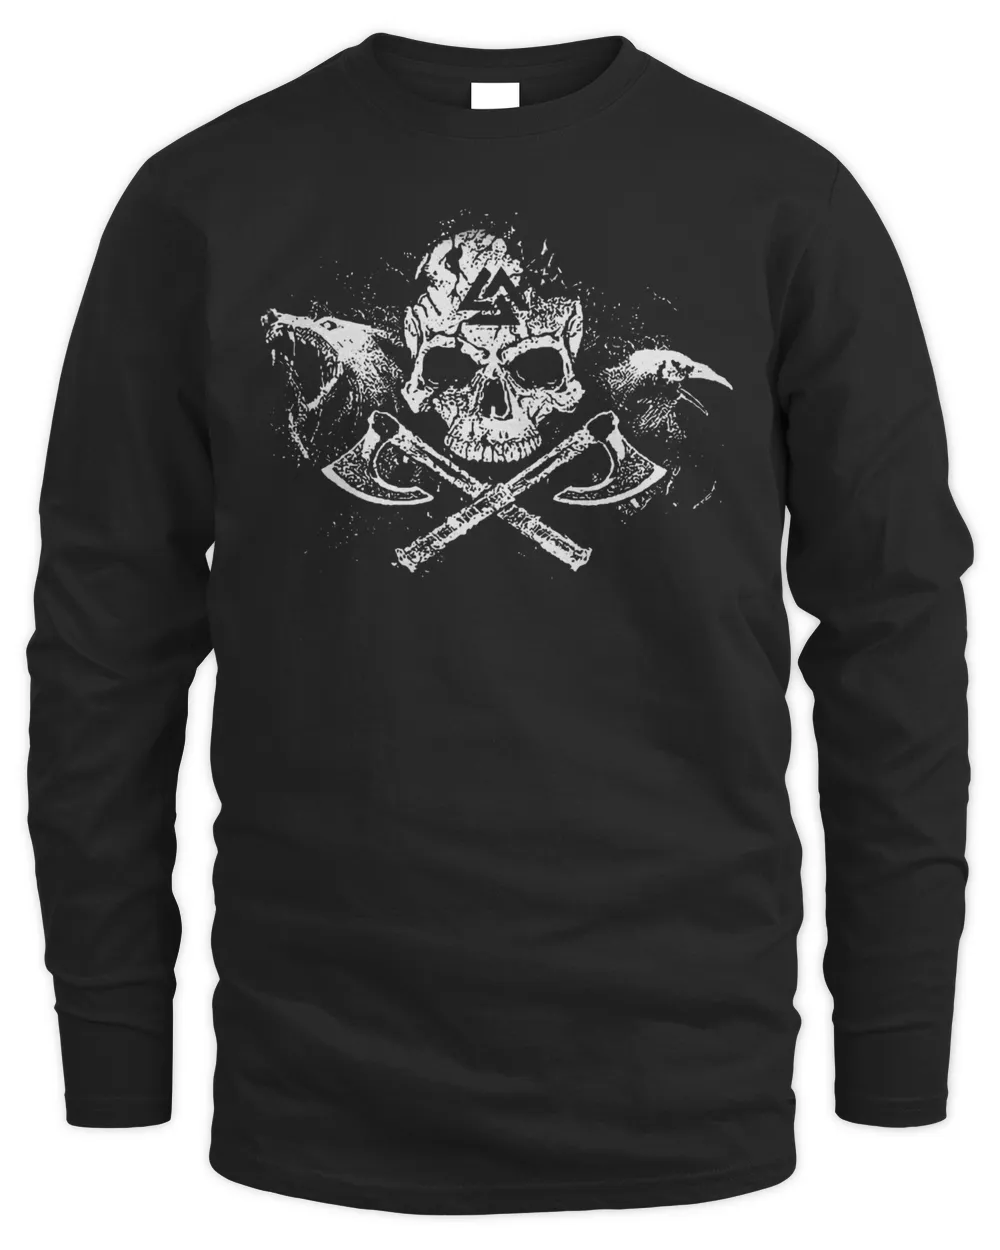 Viking T Shirt For men - Ax and skull